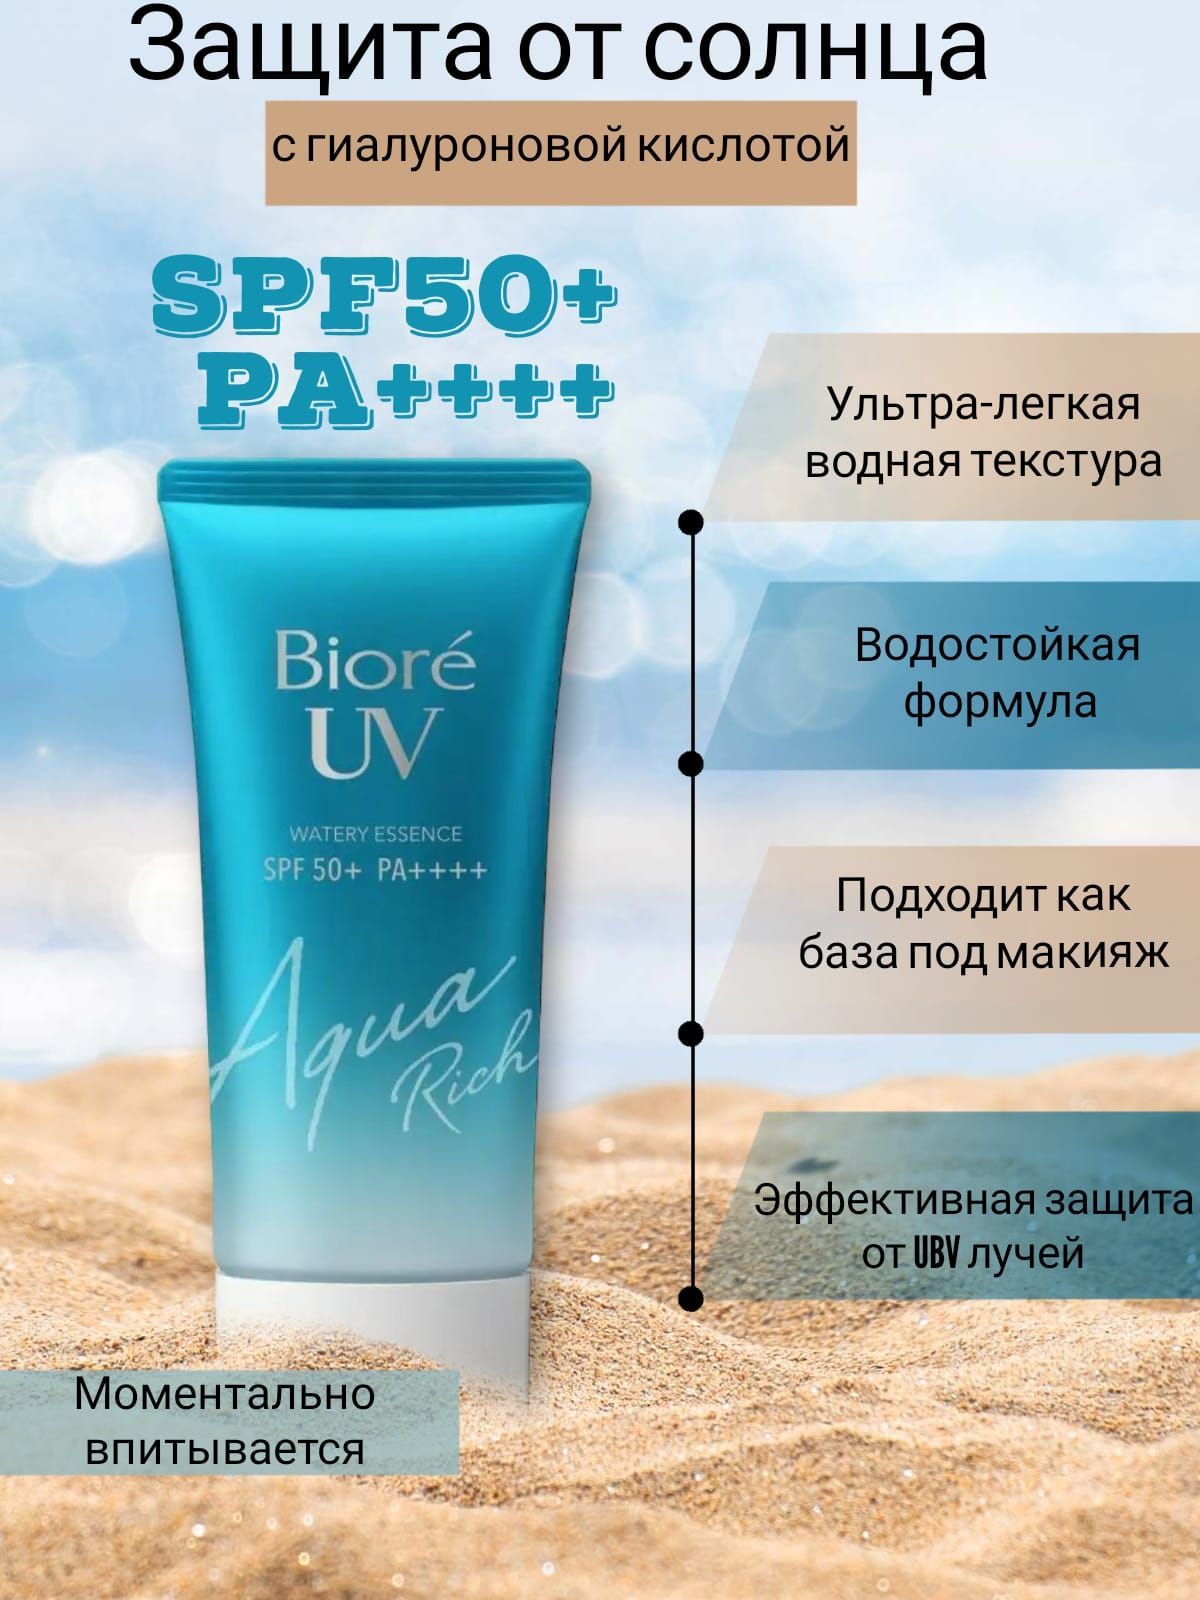 Biore флюид UV Aqua Rich SPF 50. Солнцезащитный флюид UV Aqua Rich spf50 50 гр. Biore UV Light up Essence солнцезащитный флюид spf50 50 гр белый.